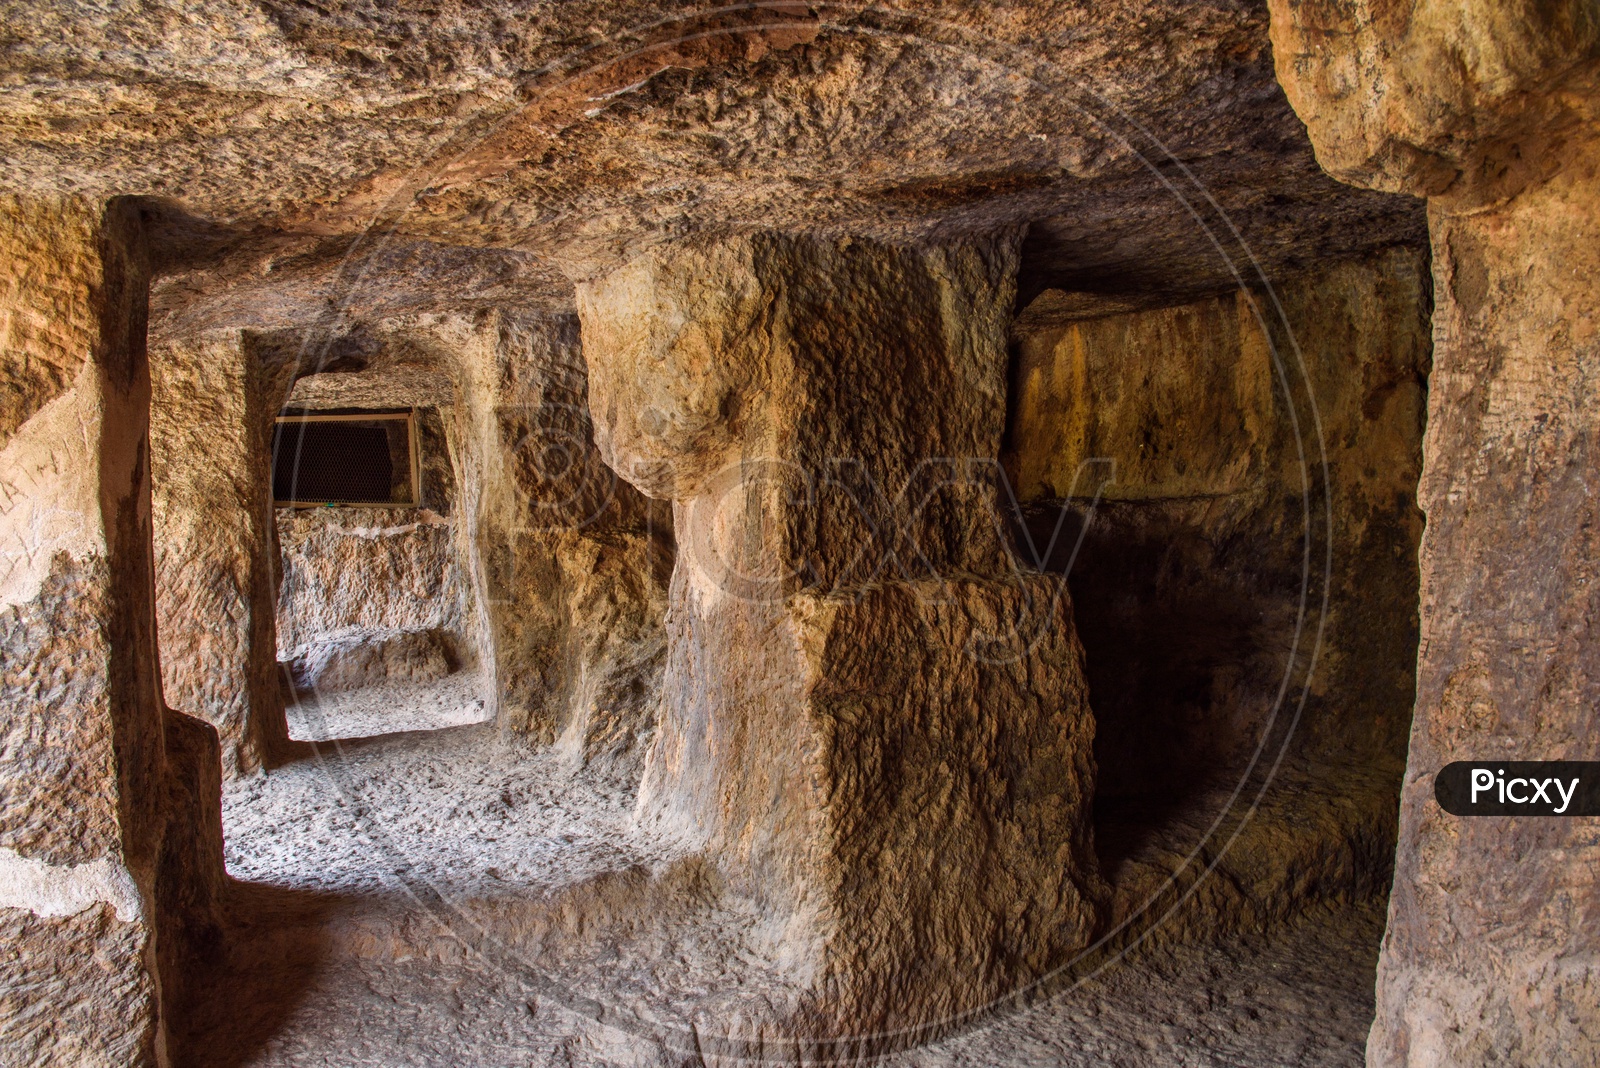 Pillar of Undavalli caves.